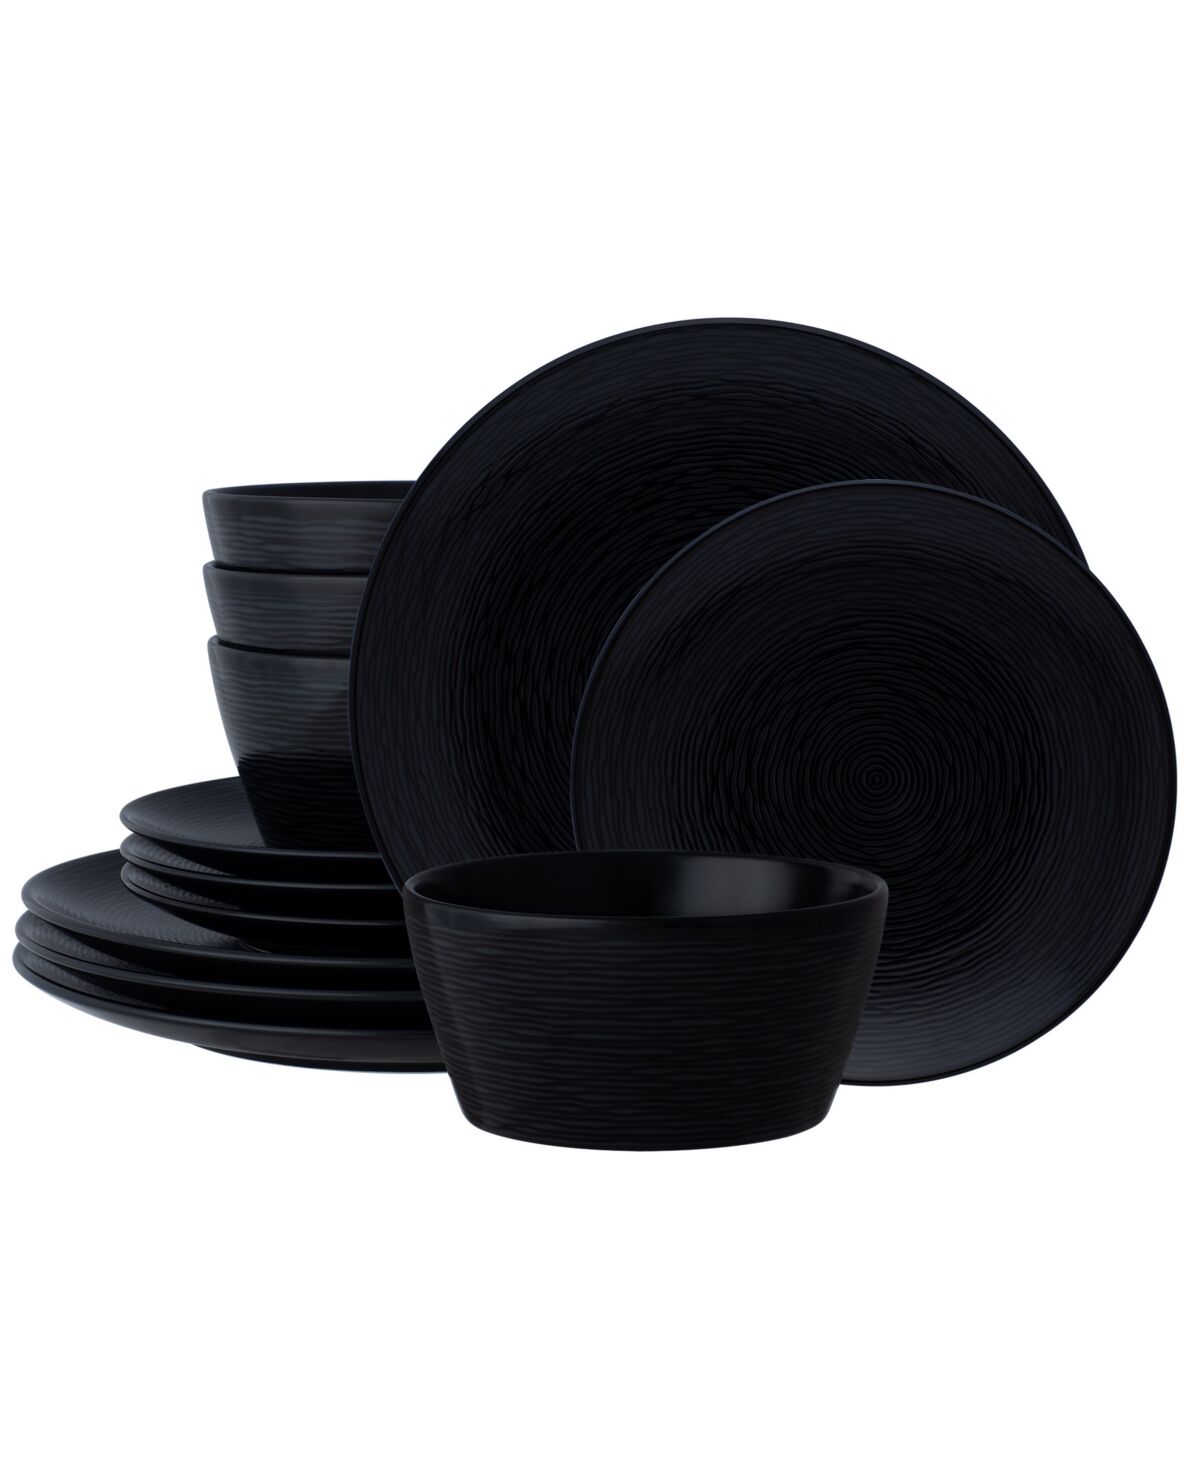 Noritake Swirl Coupe 12 Piece Dinnerware Set, Service For 4 - Black